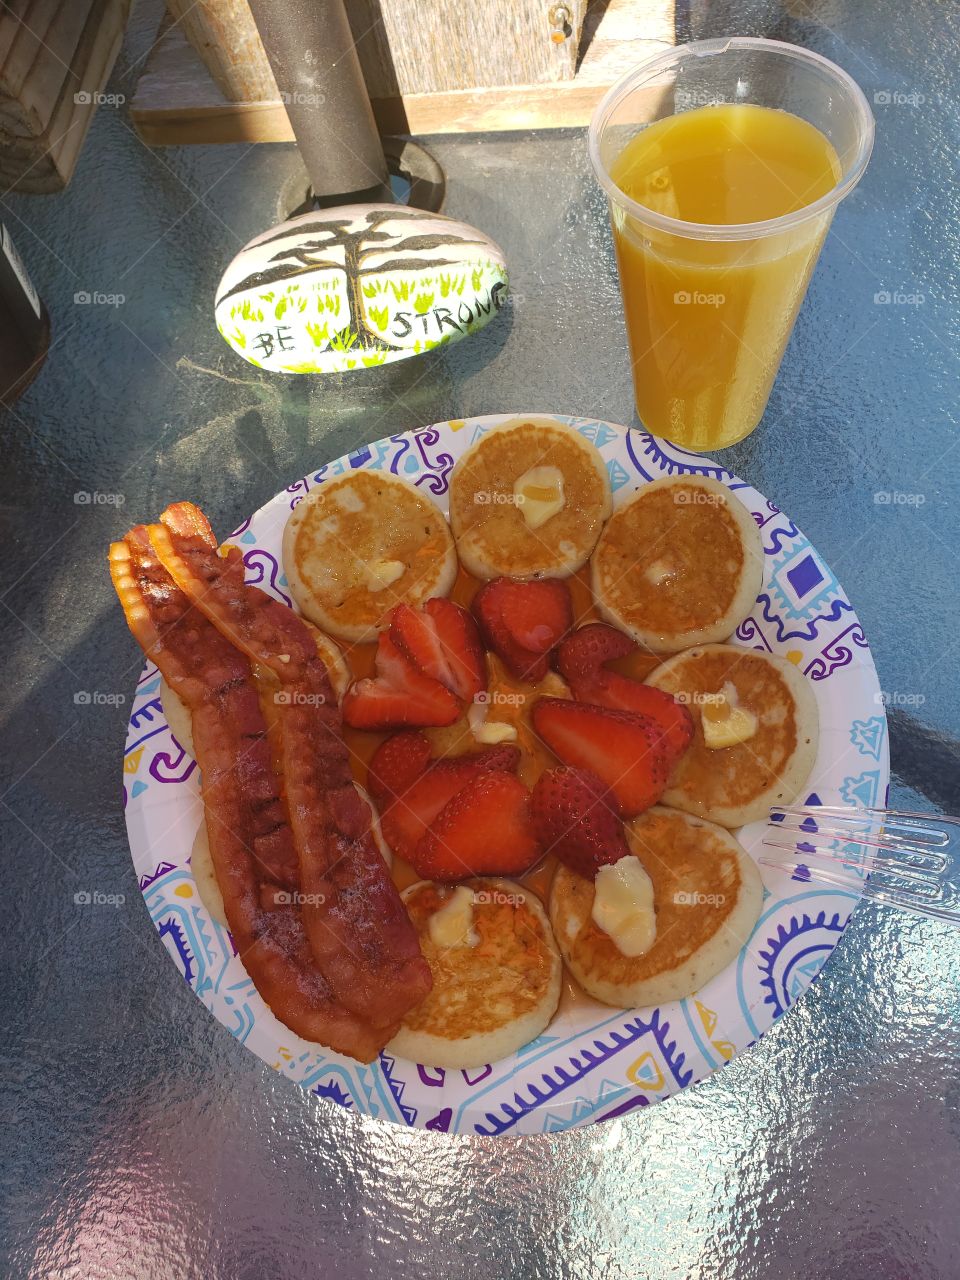 pancake, bacon and orange juice breakfast.